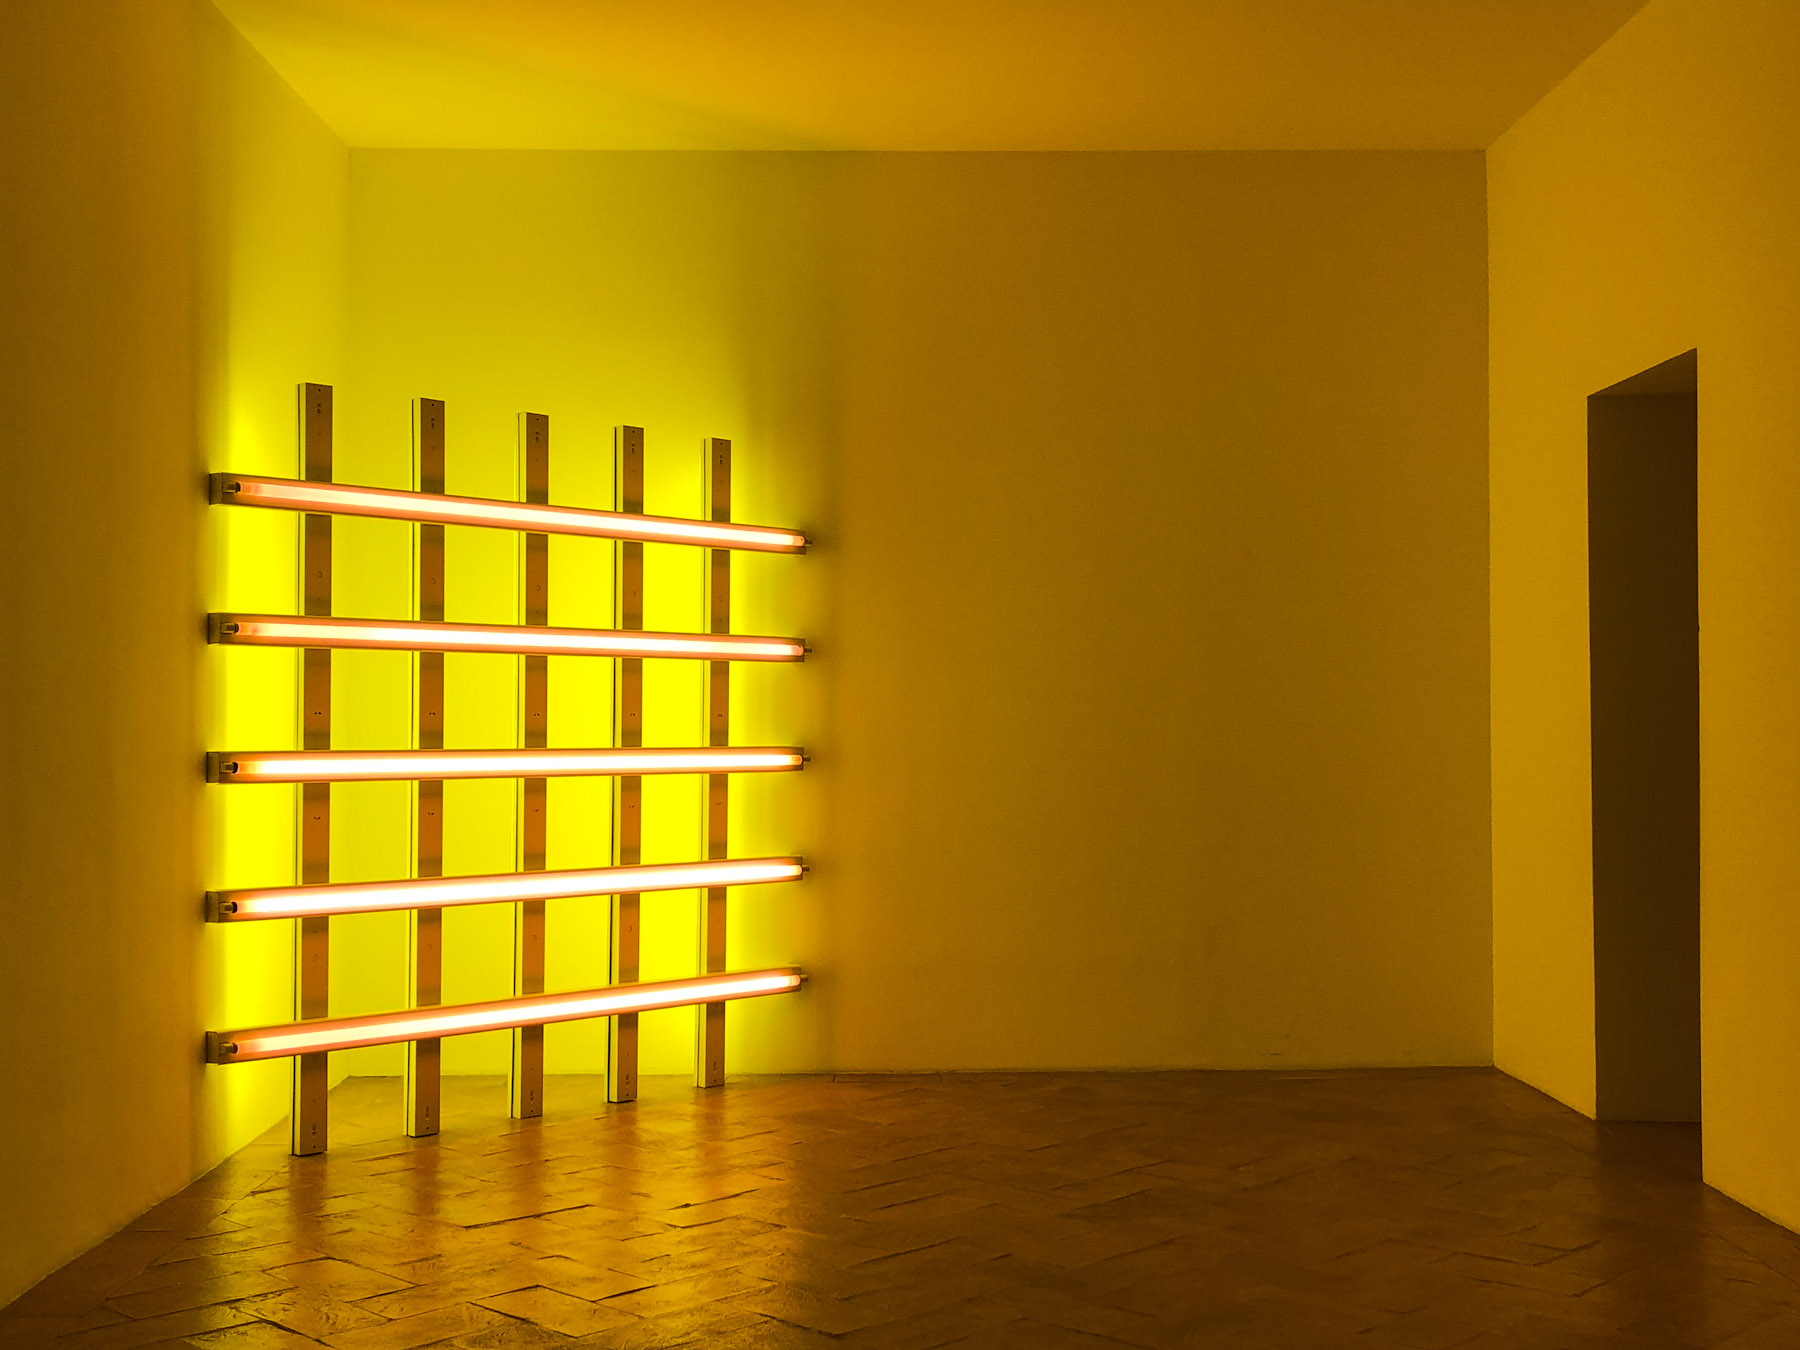 Yellow Light Installation by Dan Flavin, Villa Panza, Varese, Italy